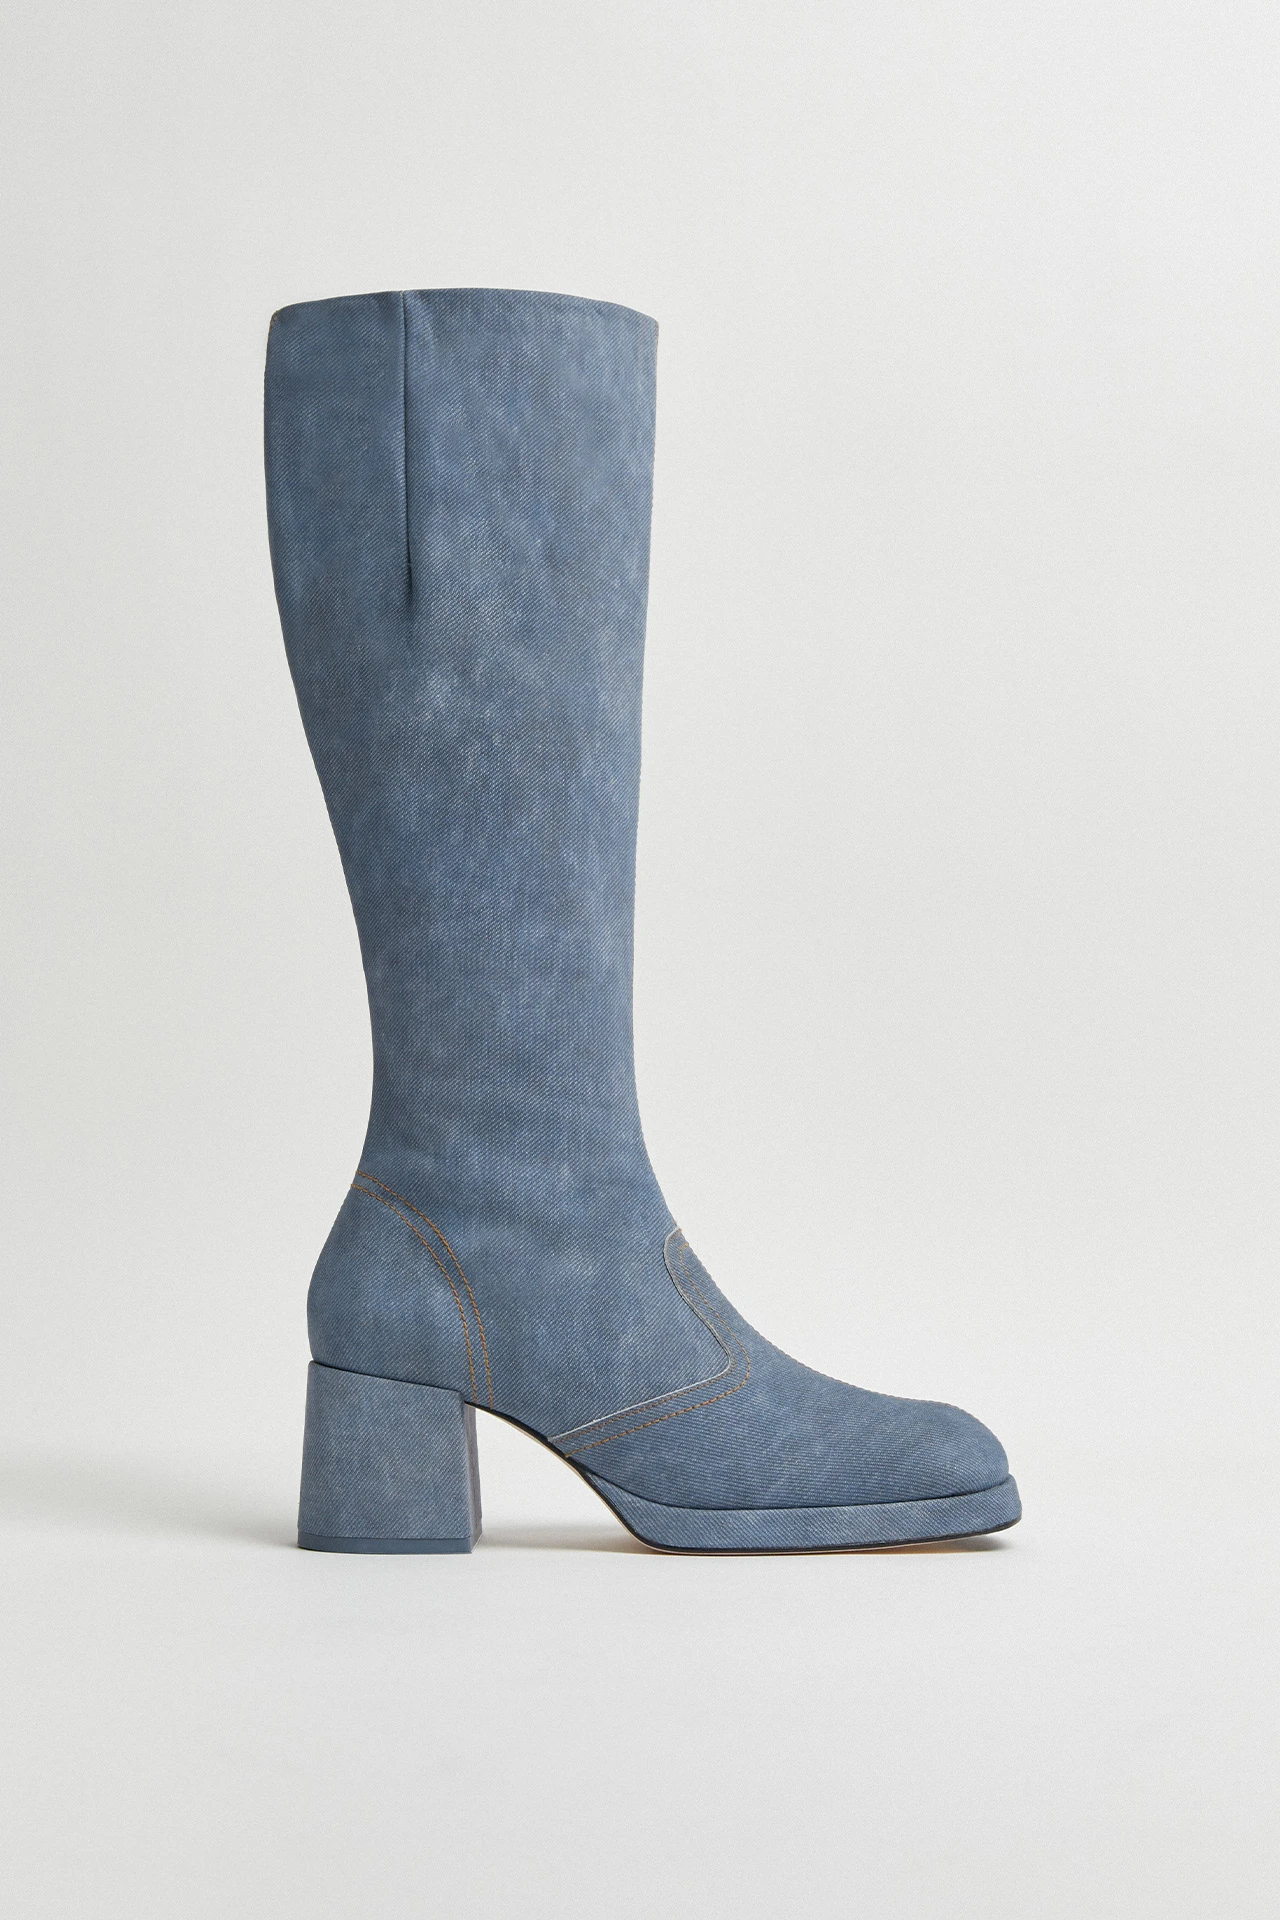 Miista-donna-denim-tall-boots-01